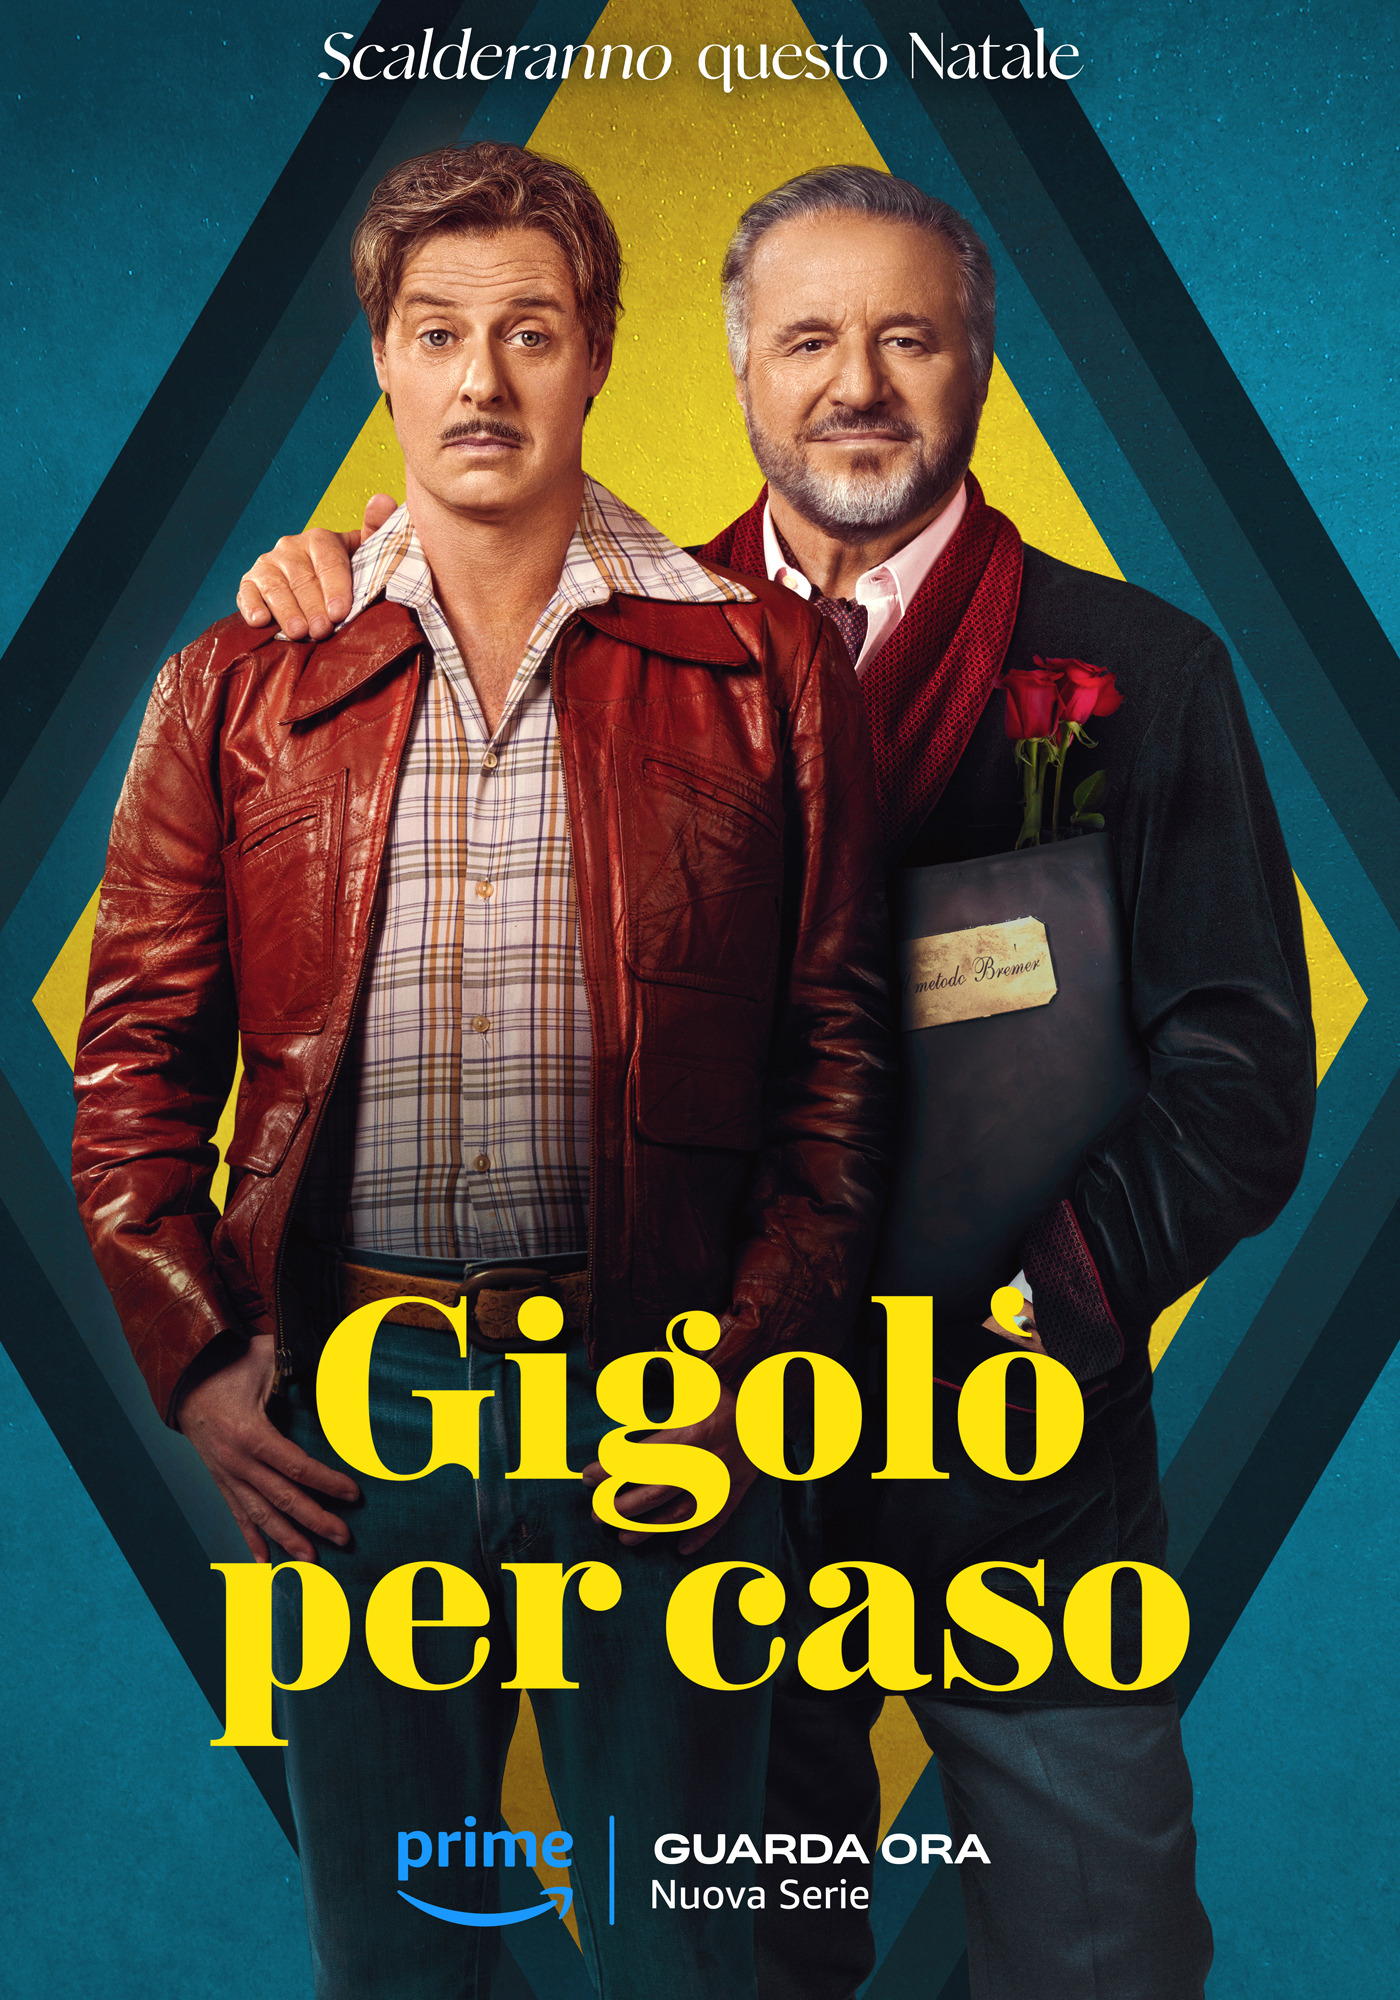 Mega Sized TV Poster Image for Gigolò per caso (#4 of 4)